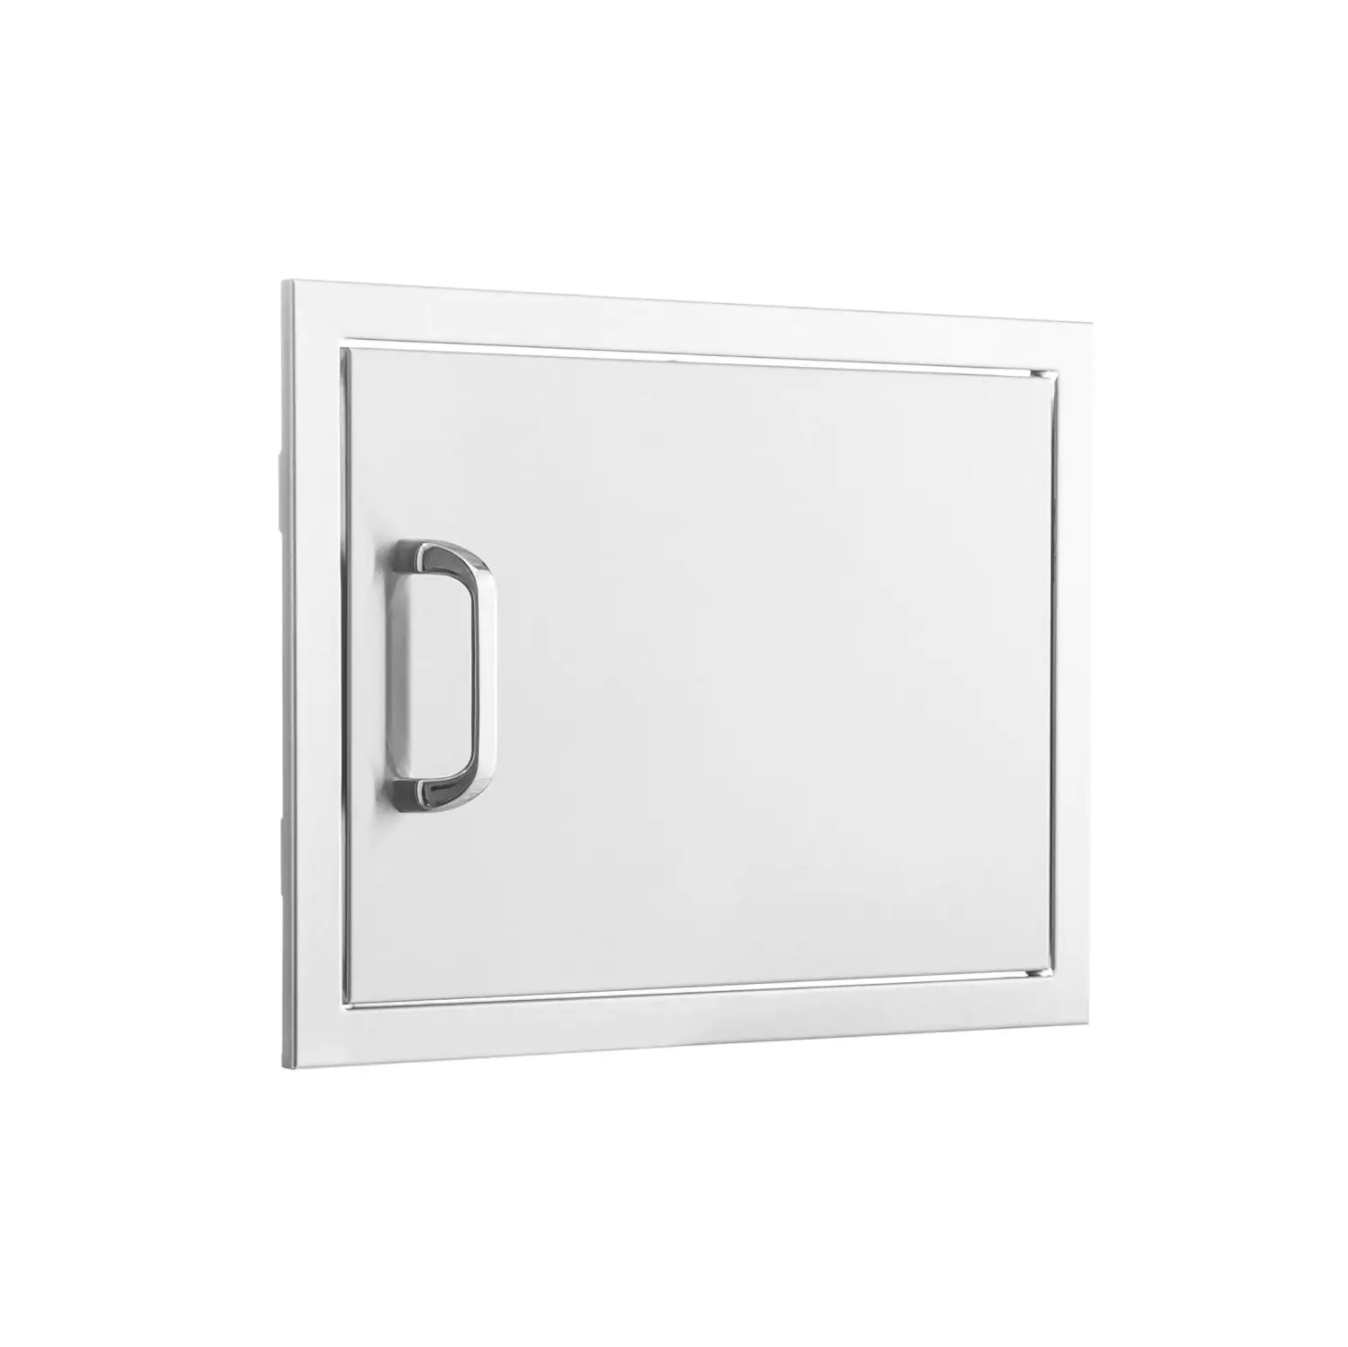 PCM 260 Series 24" Stainless Steel Horizontal Reversible Single Access Door